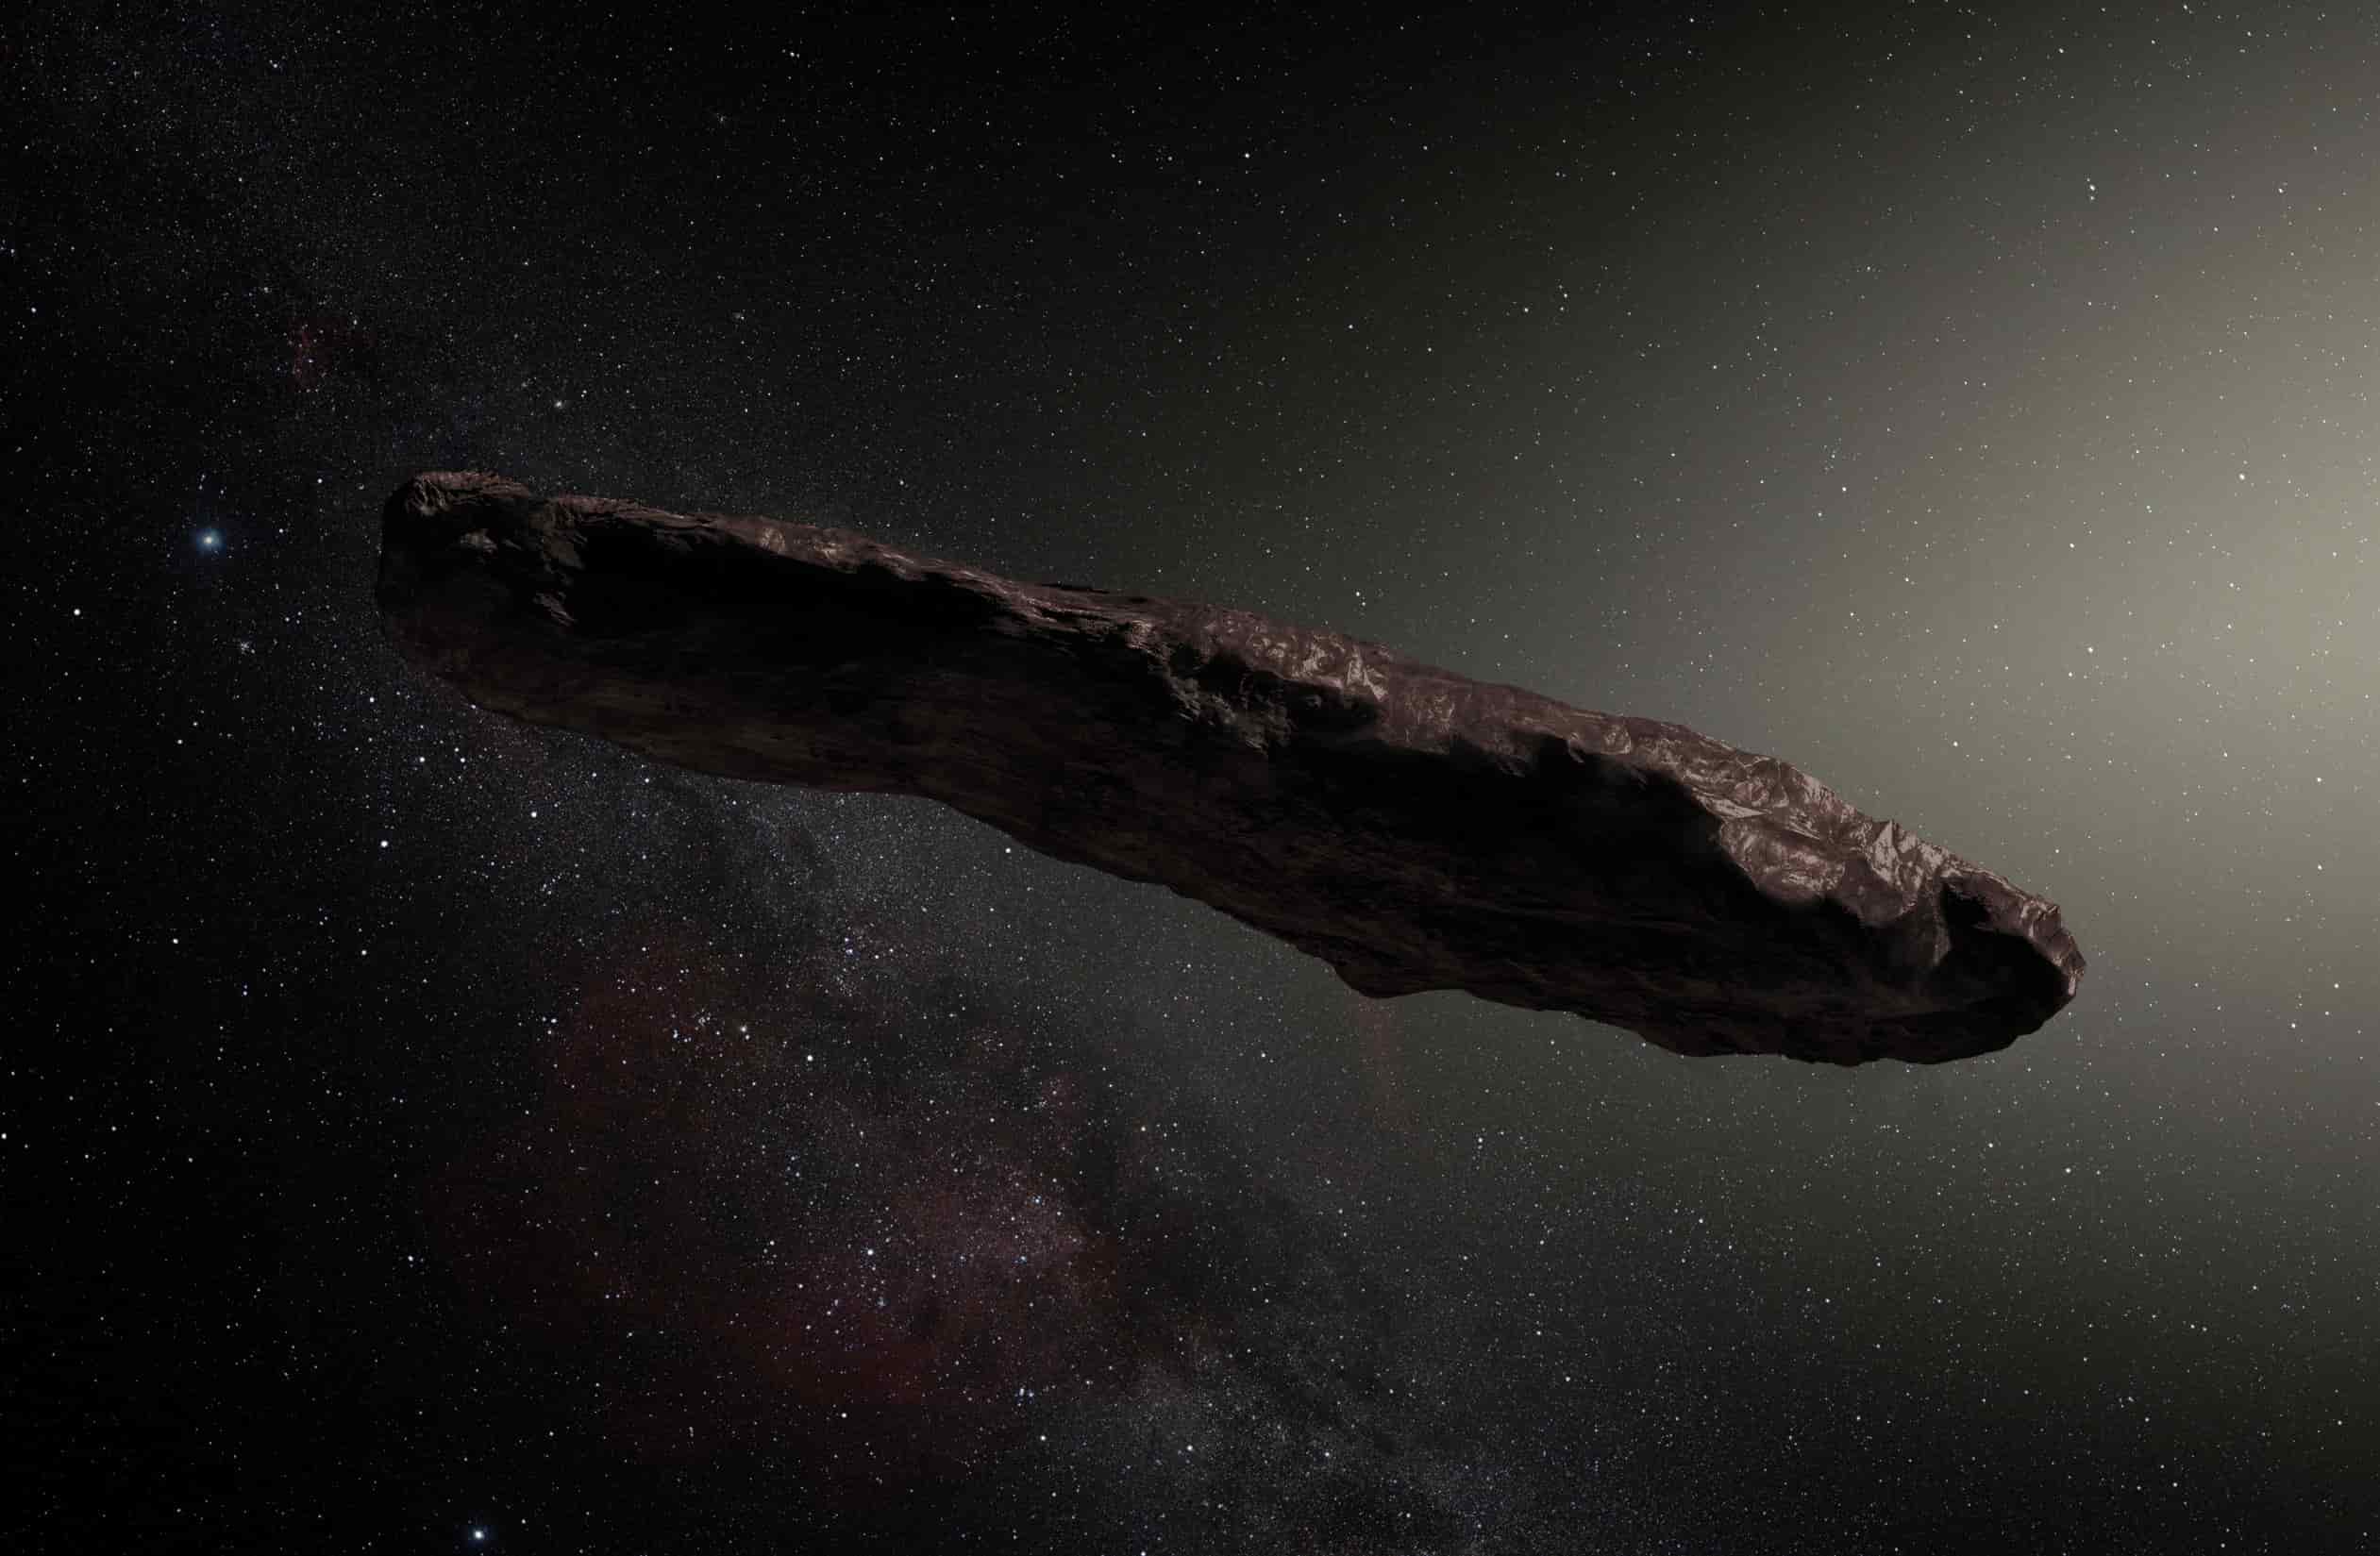 Artist impression of Oumuamua